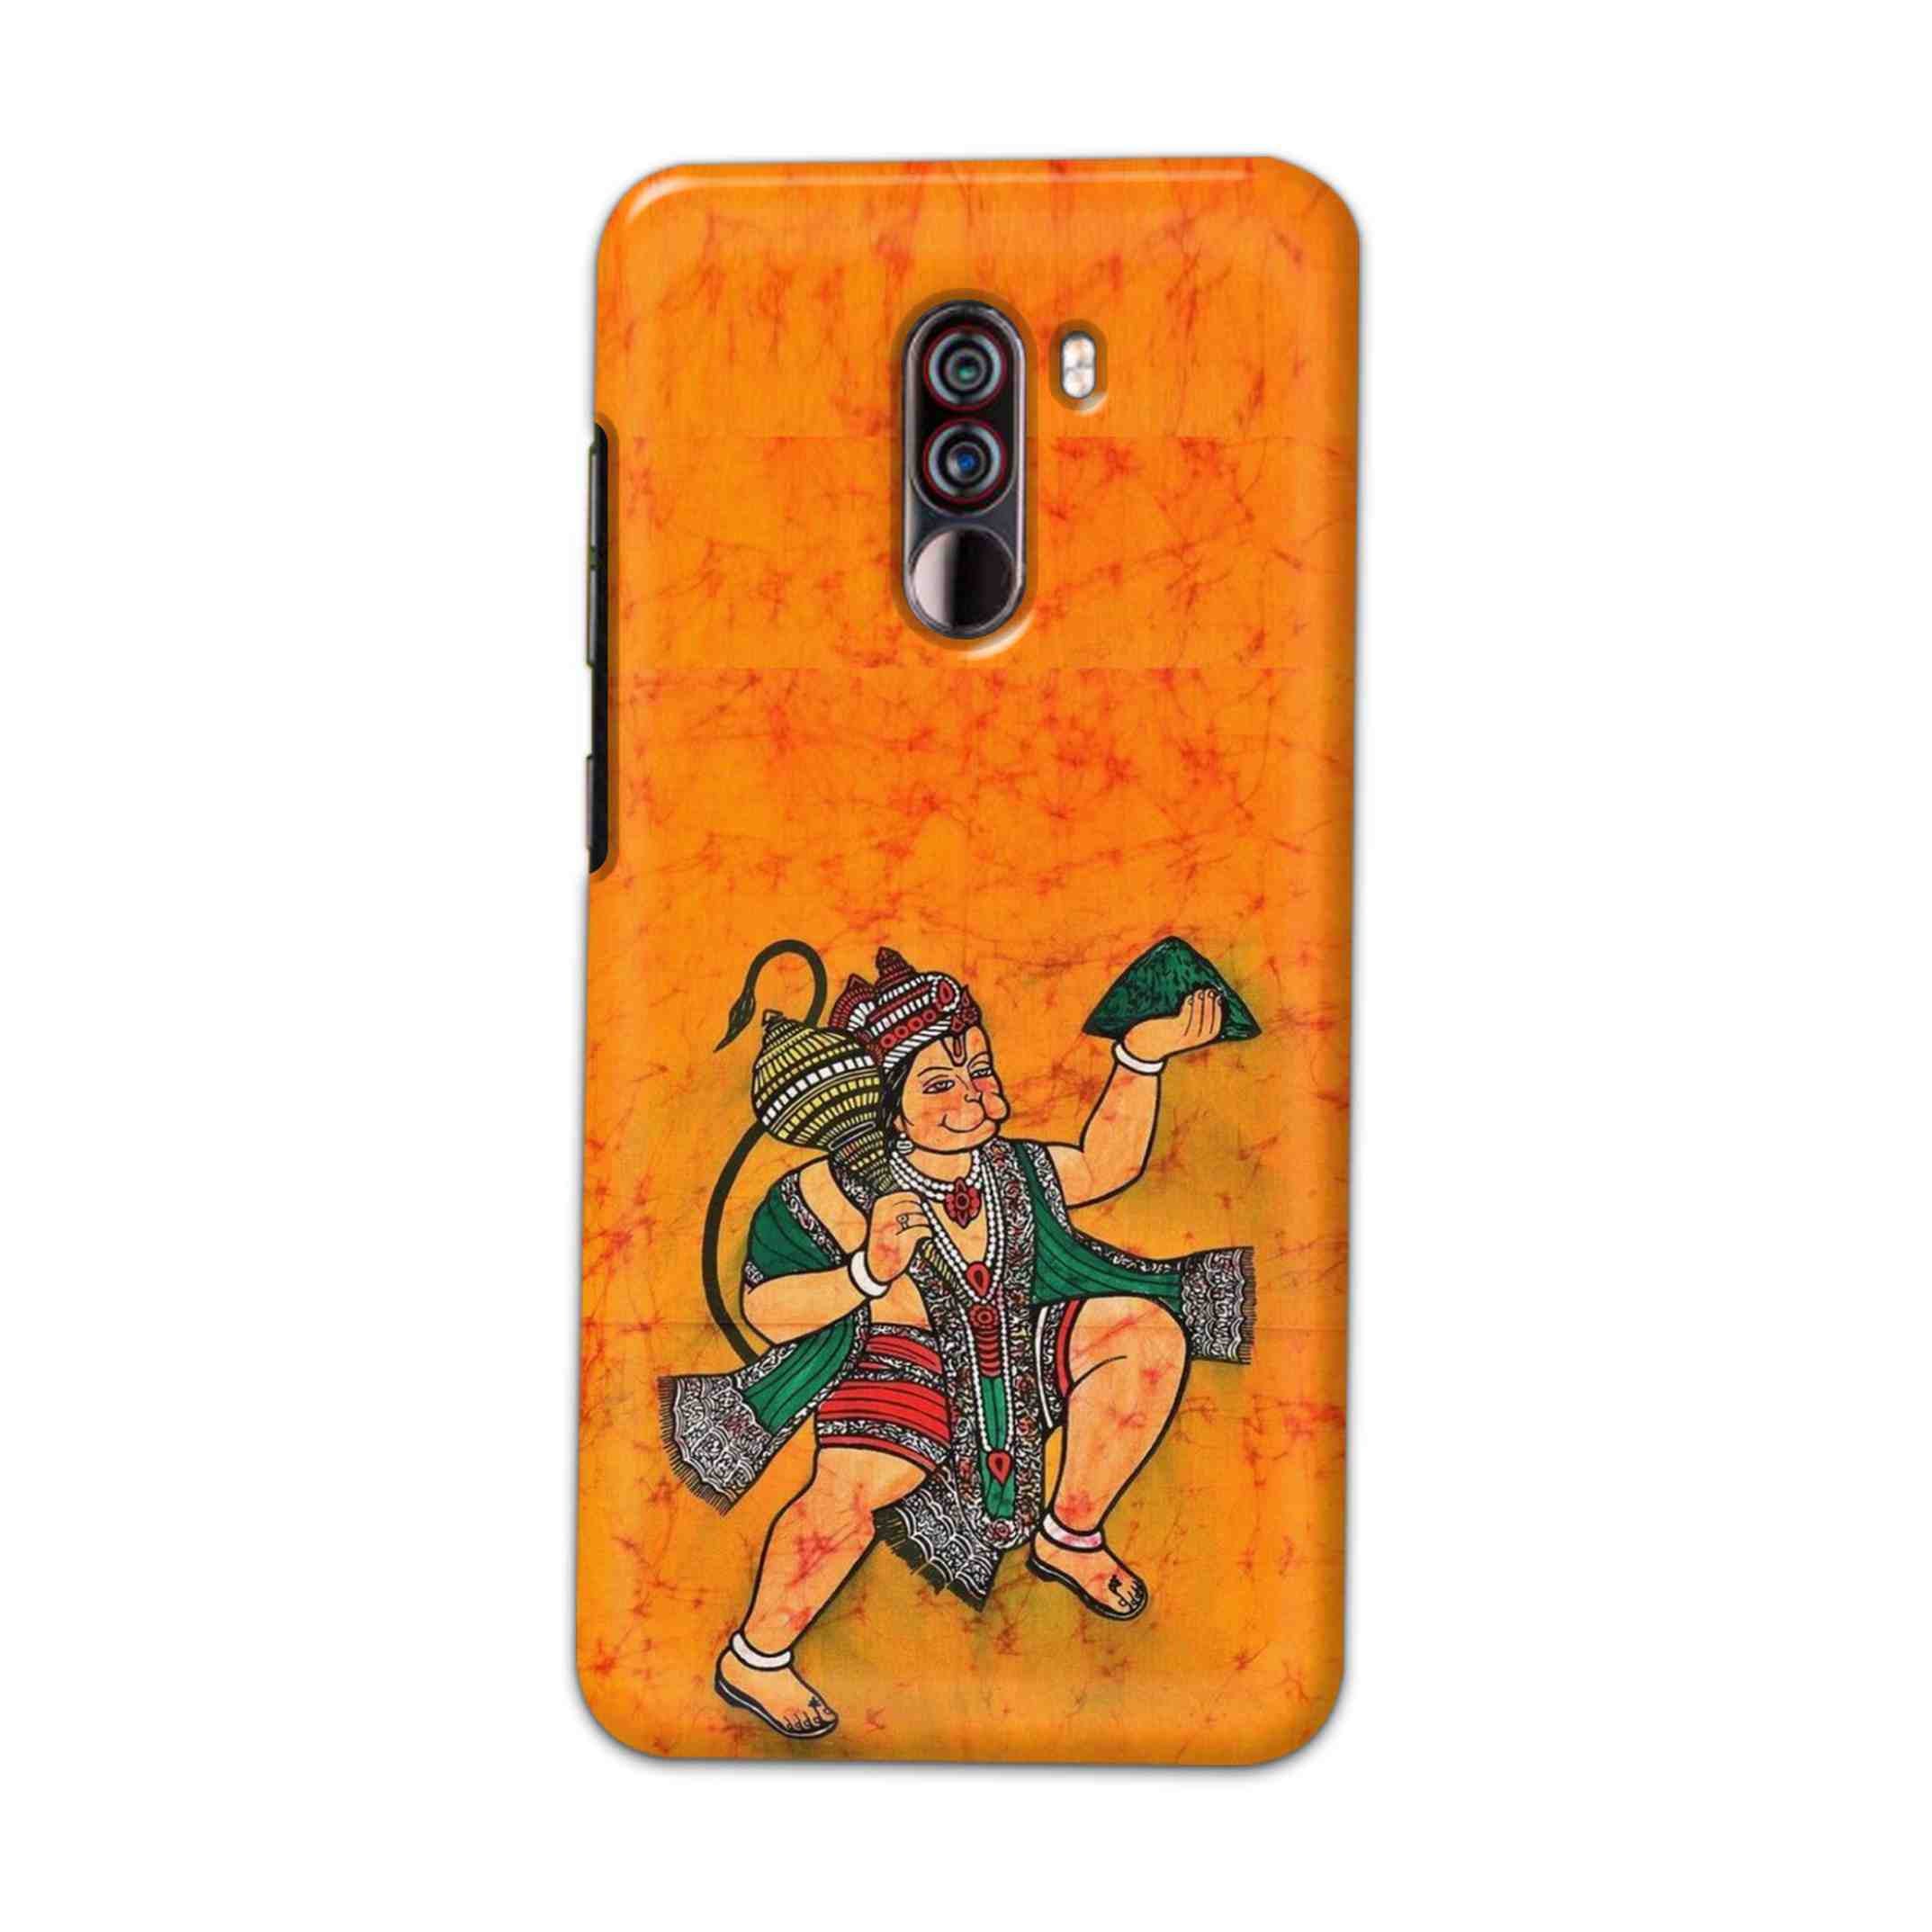 Buy Hanuman Ji Hard Back Mobile Phone Case Cover For Xiaomi Pocophone F1 Online